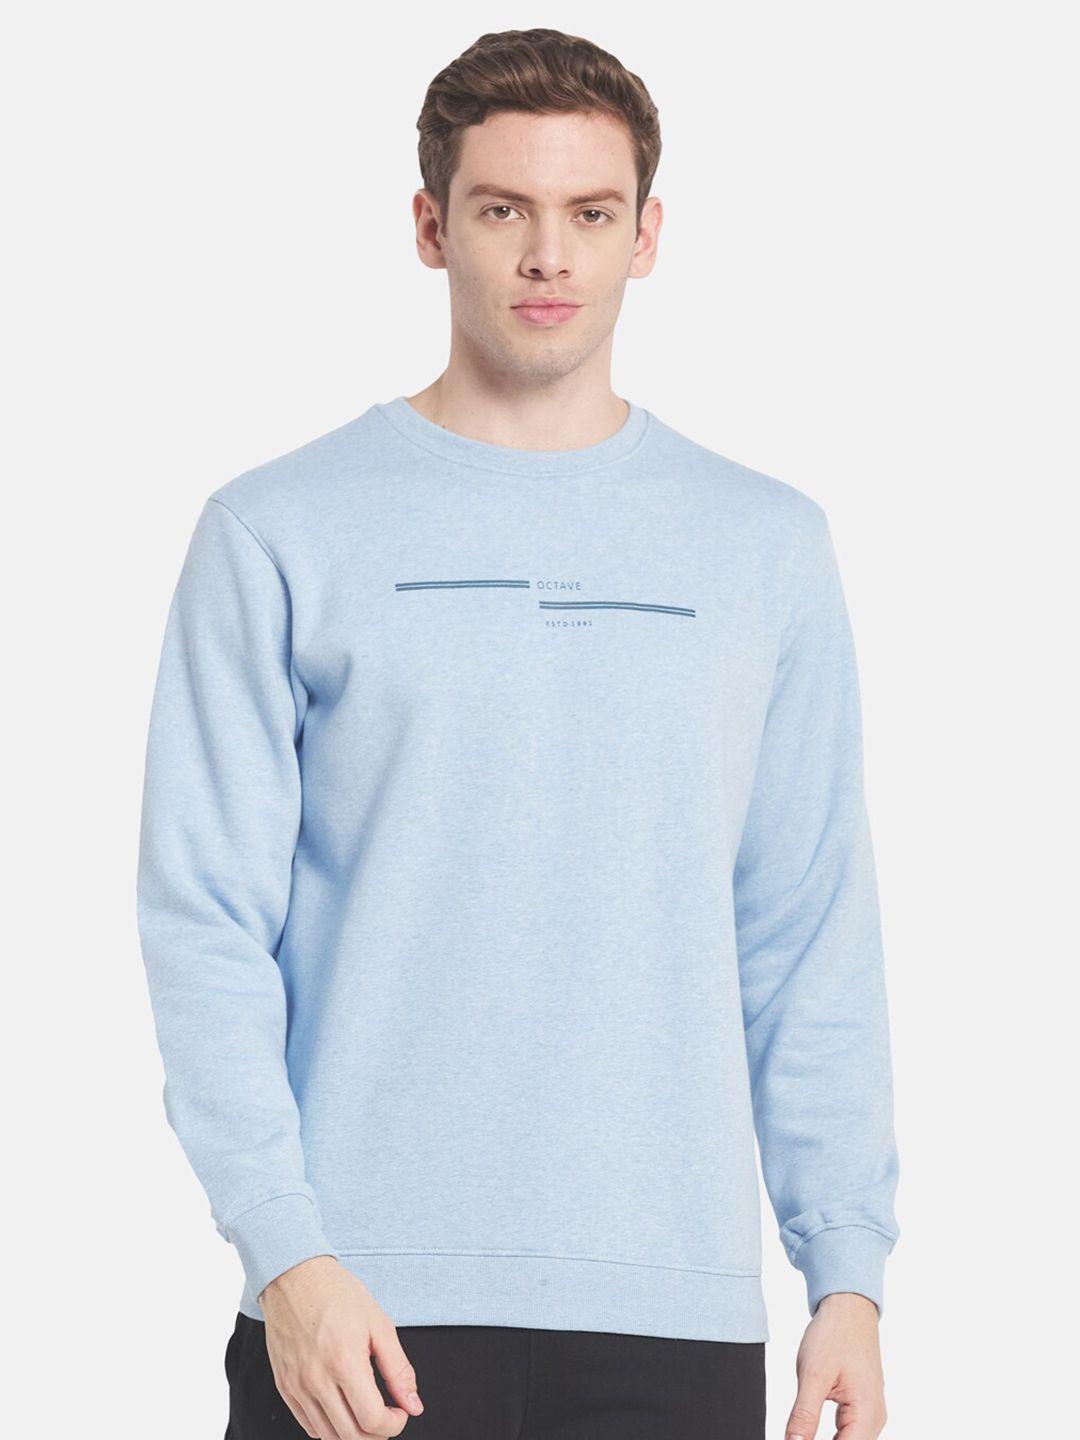 octave men blue printed sweatshirt